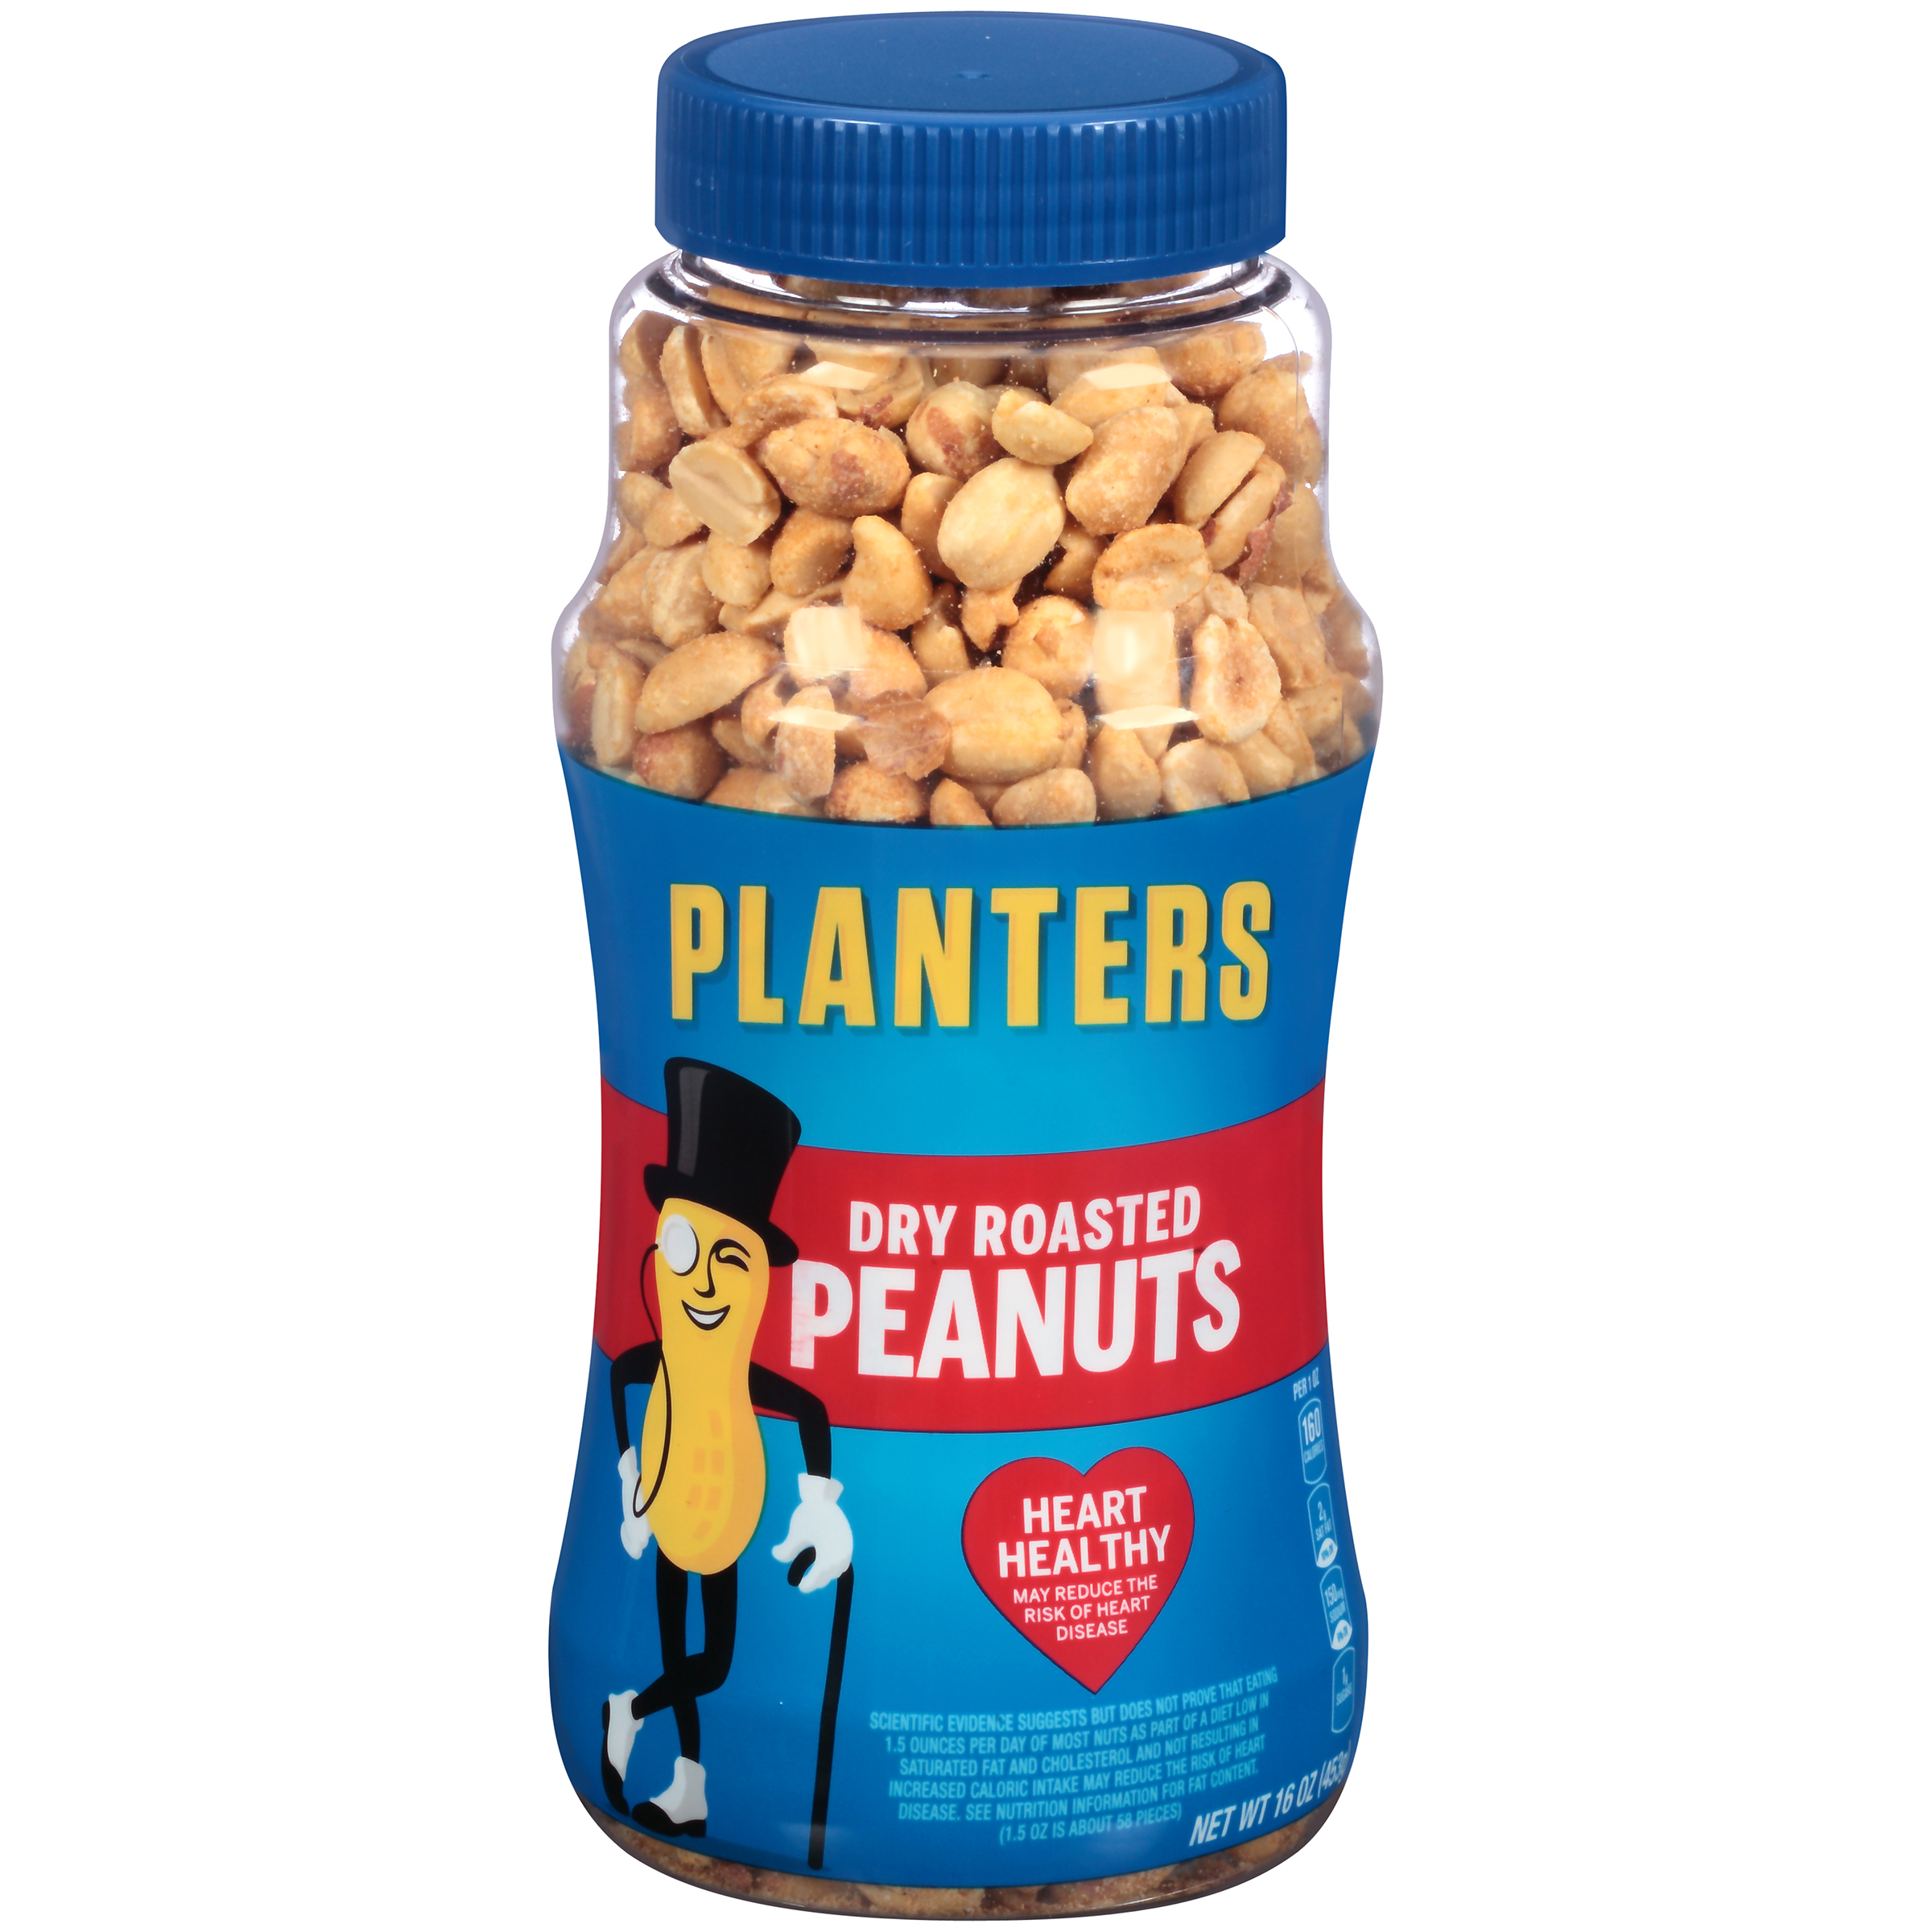 Planters Peanuts, Dry Roasted, 1 lb (453 g)